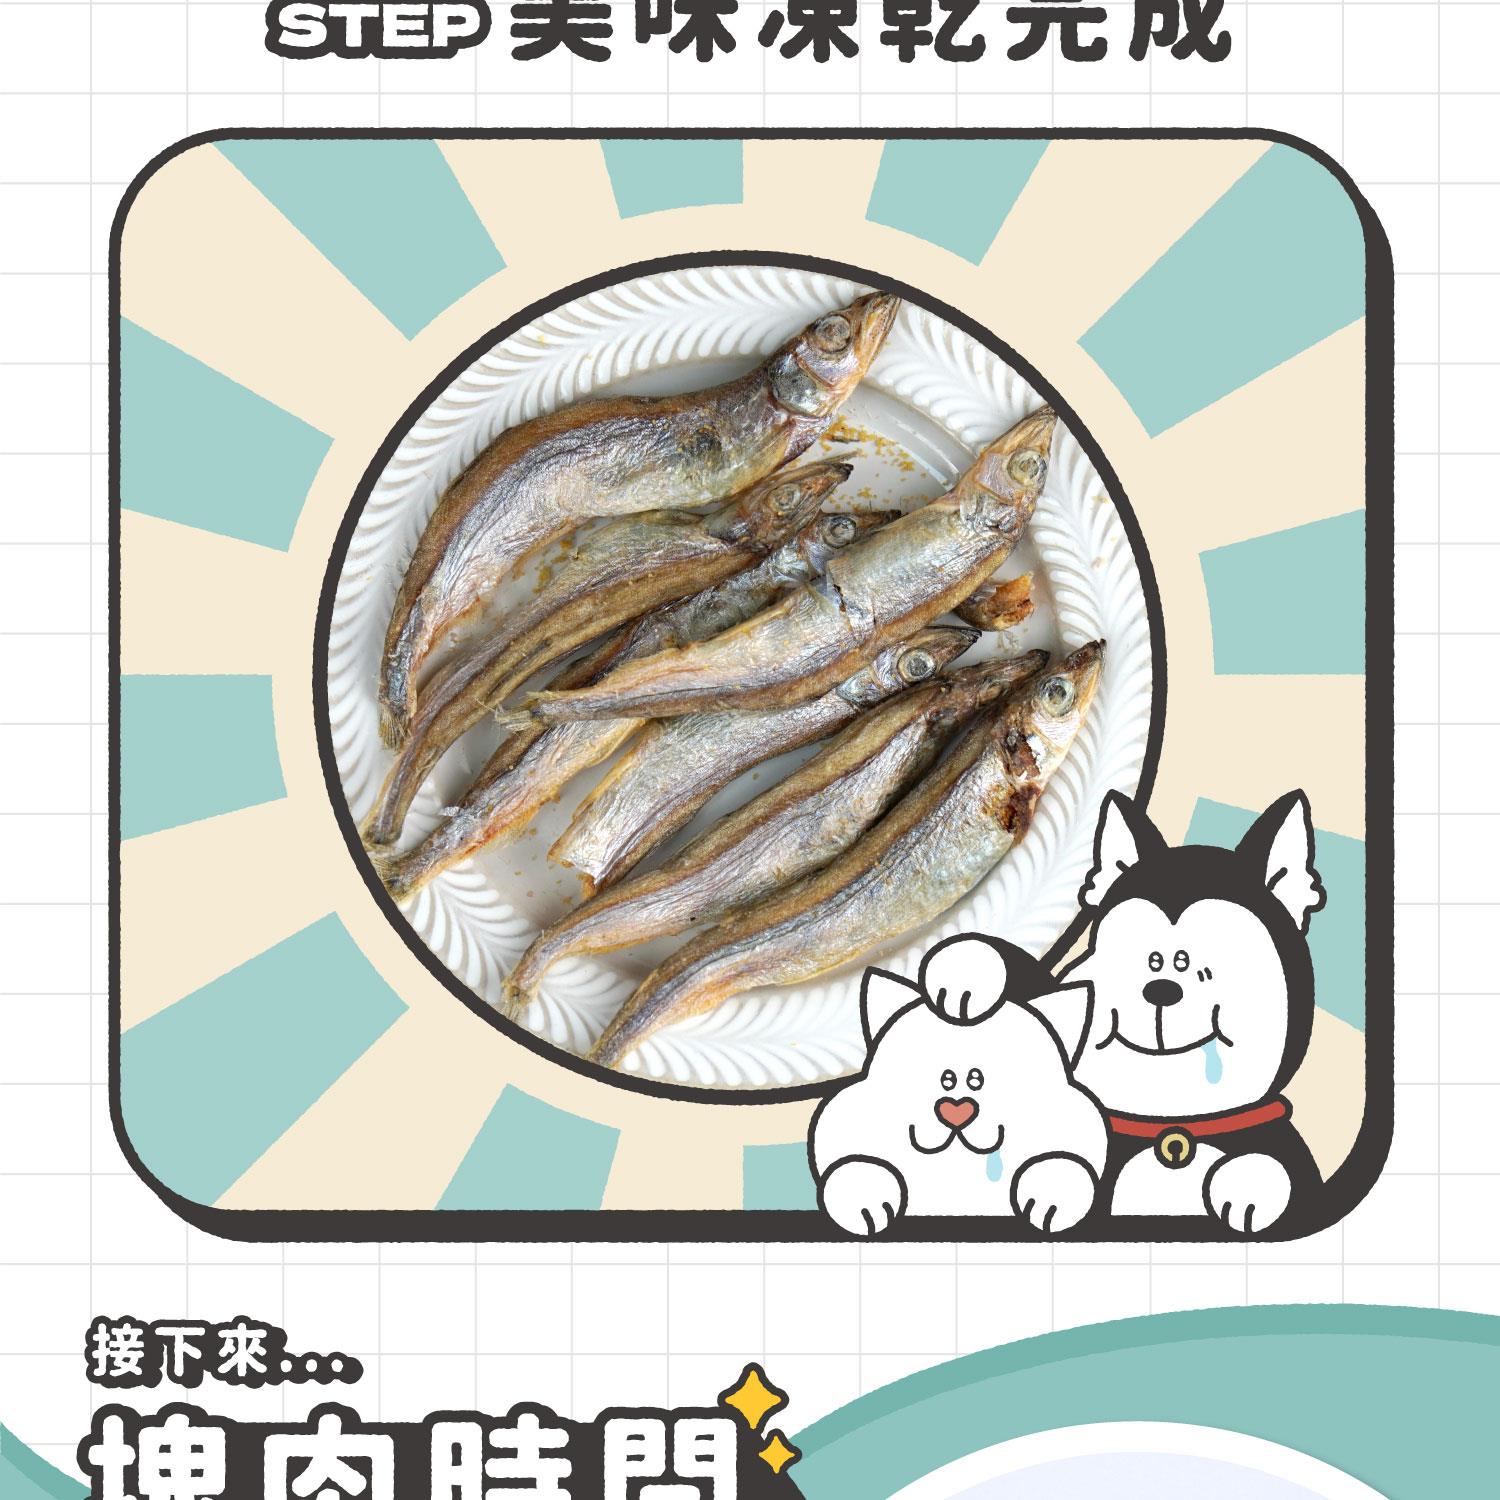 nu-treat-fish-intro5.jpg